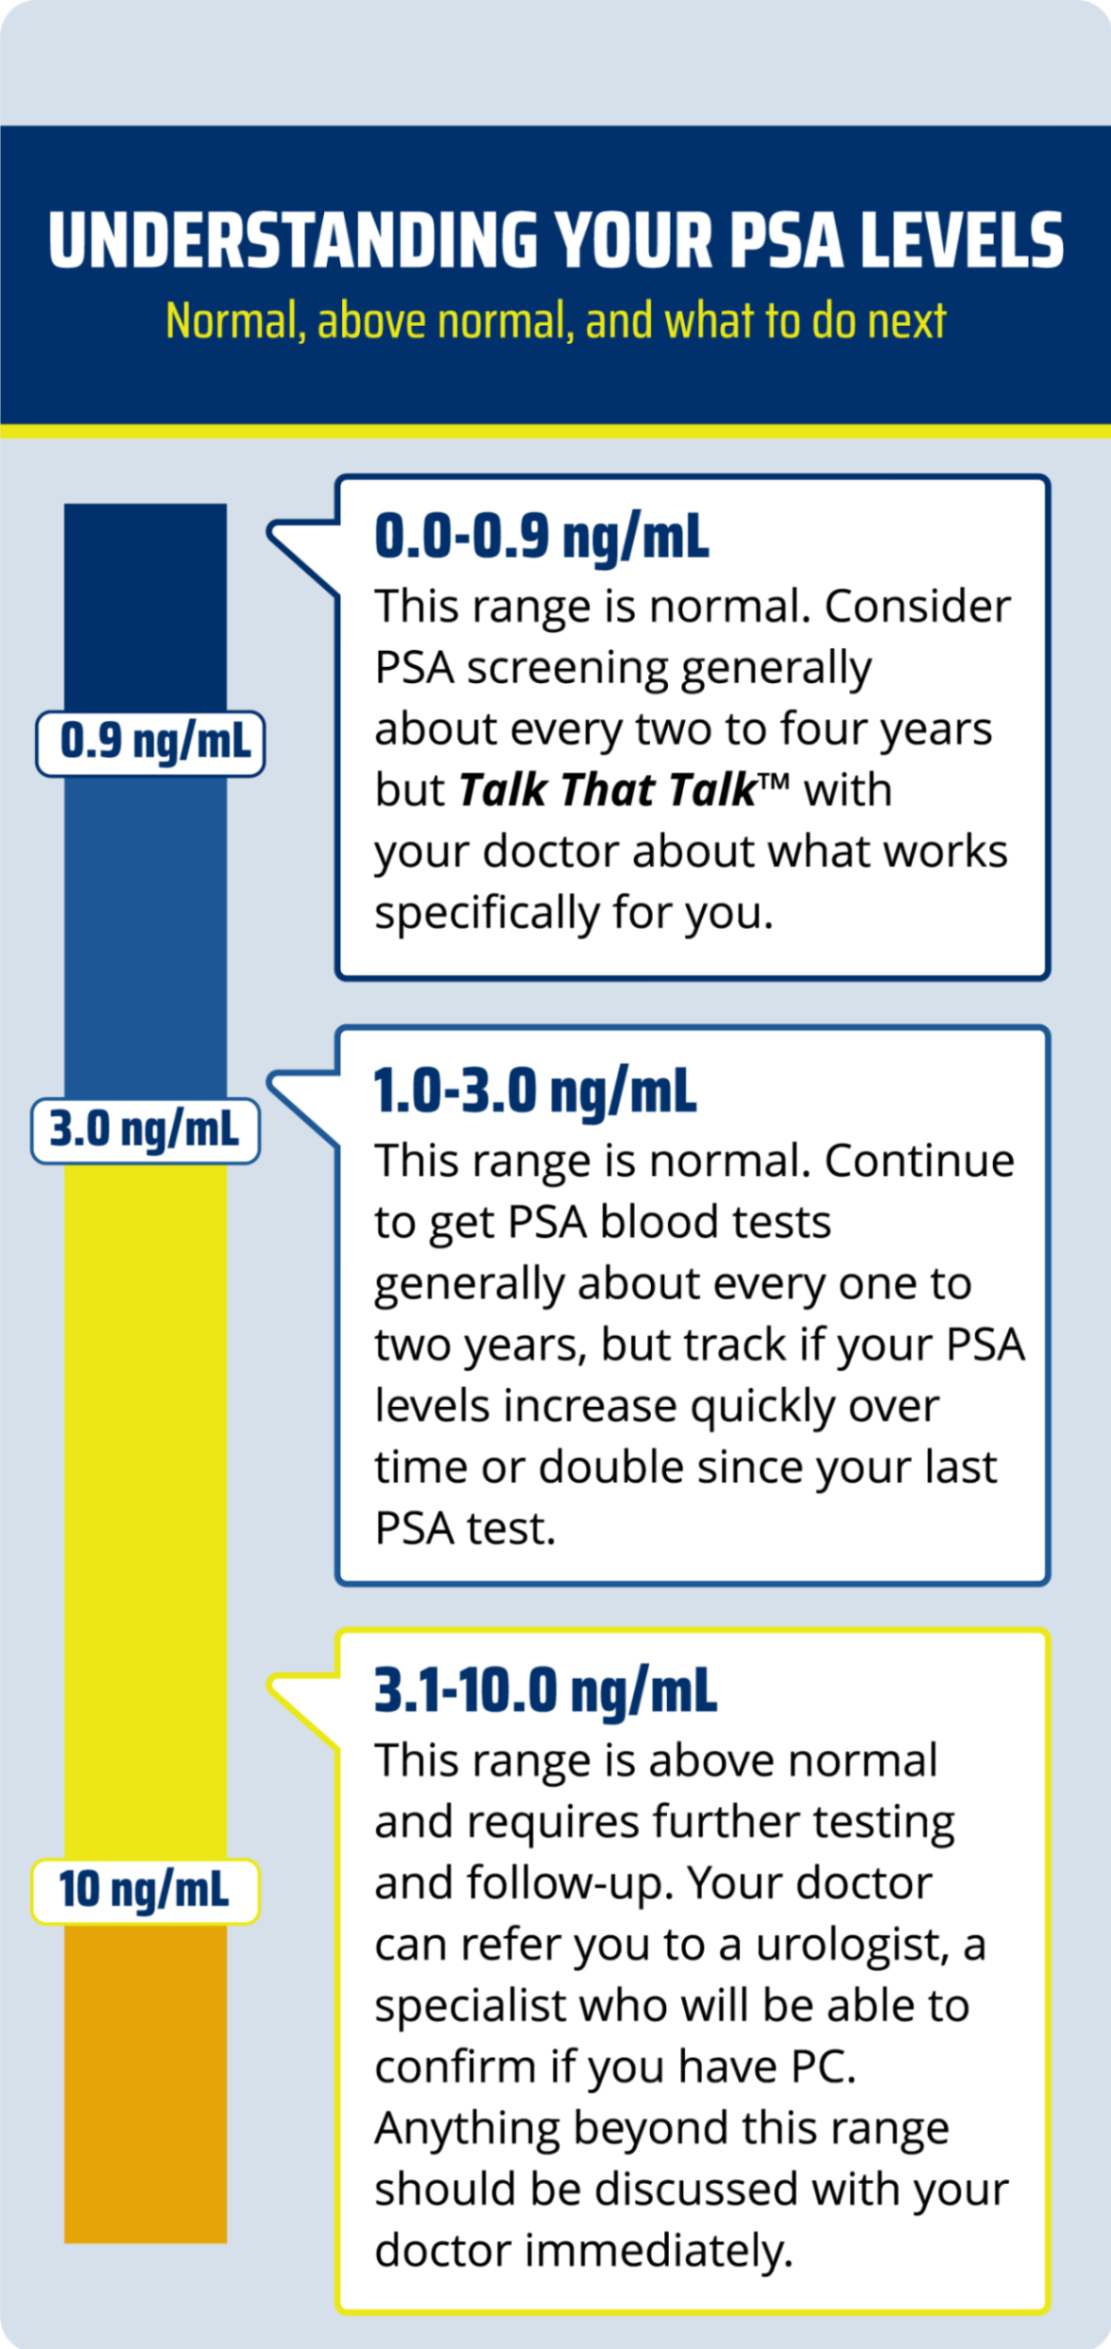 Understanding your PSA levels infographic